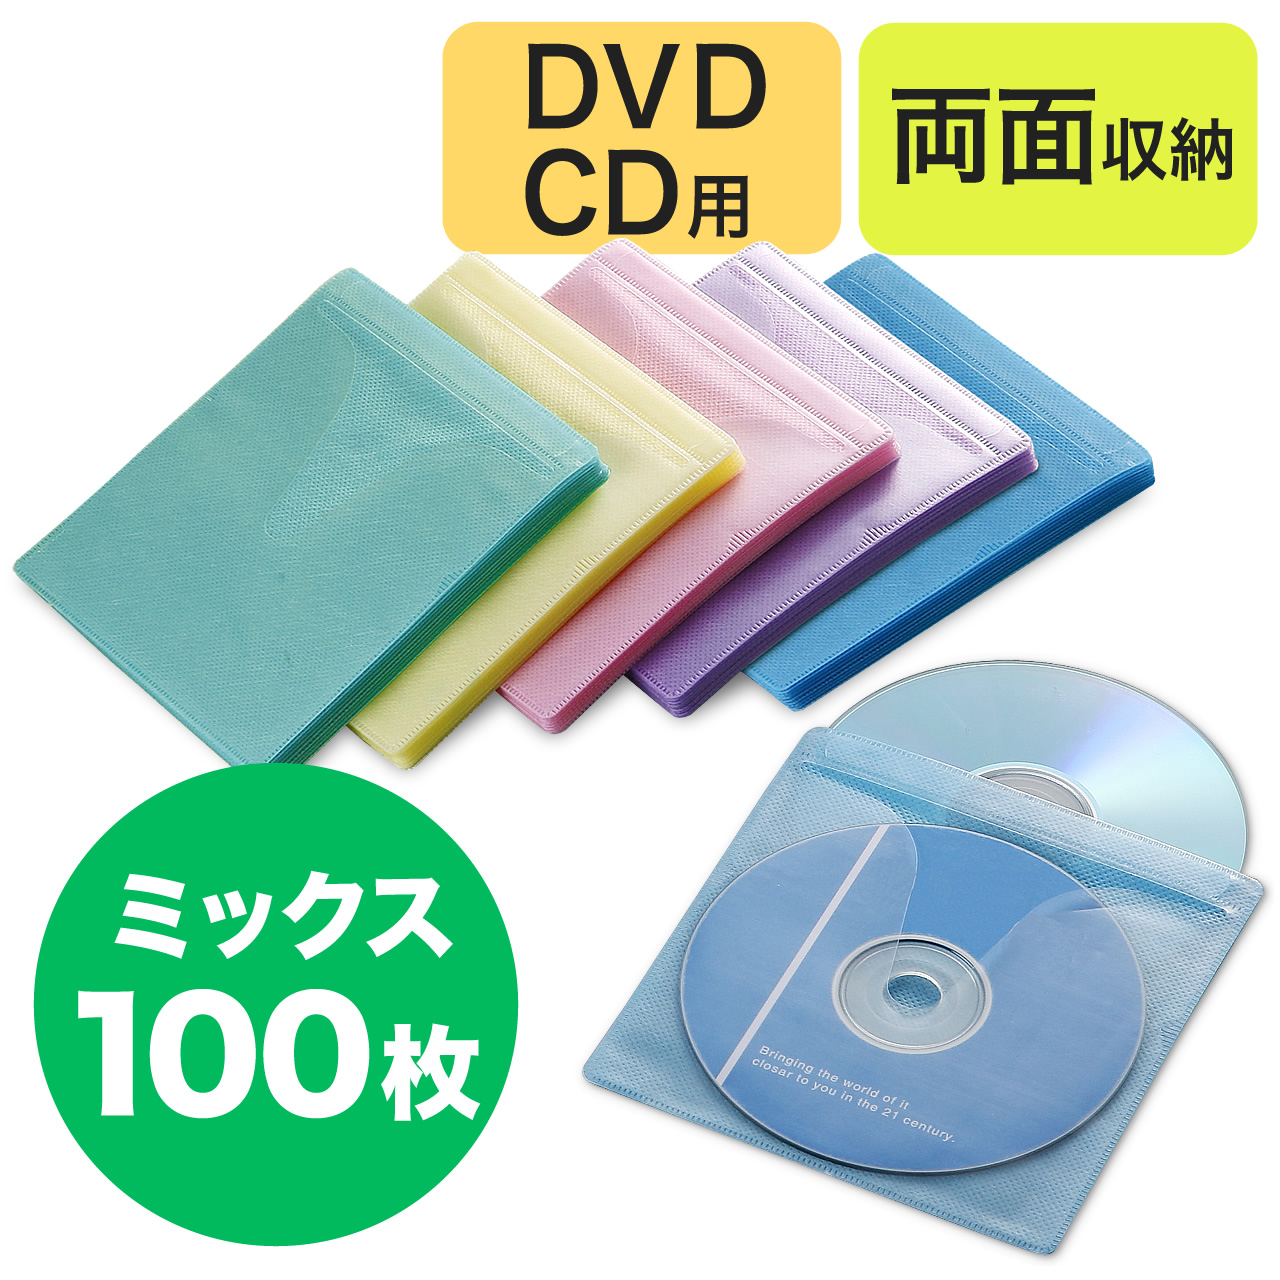 Cd Dvd用不織布ケース 両面収納 5色ミックス 200 Fcd008mxの販売